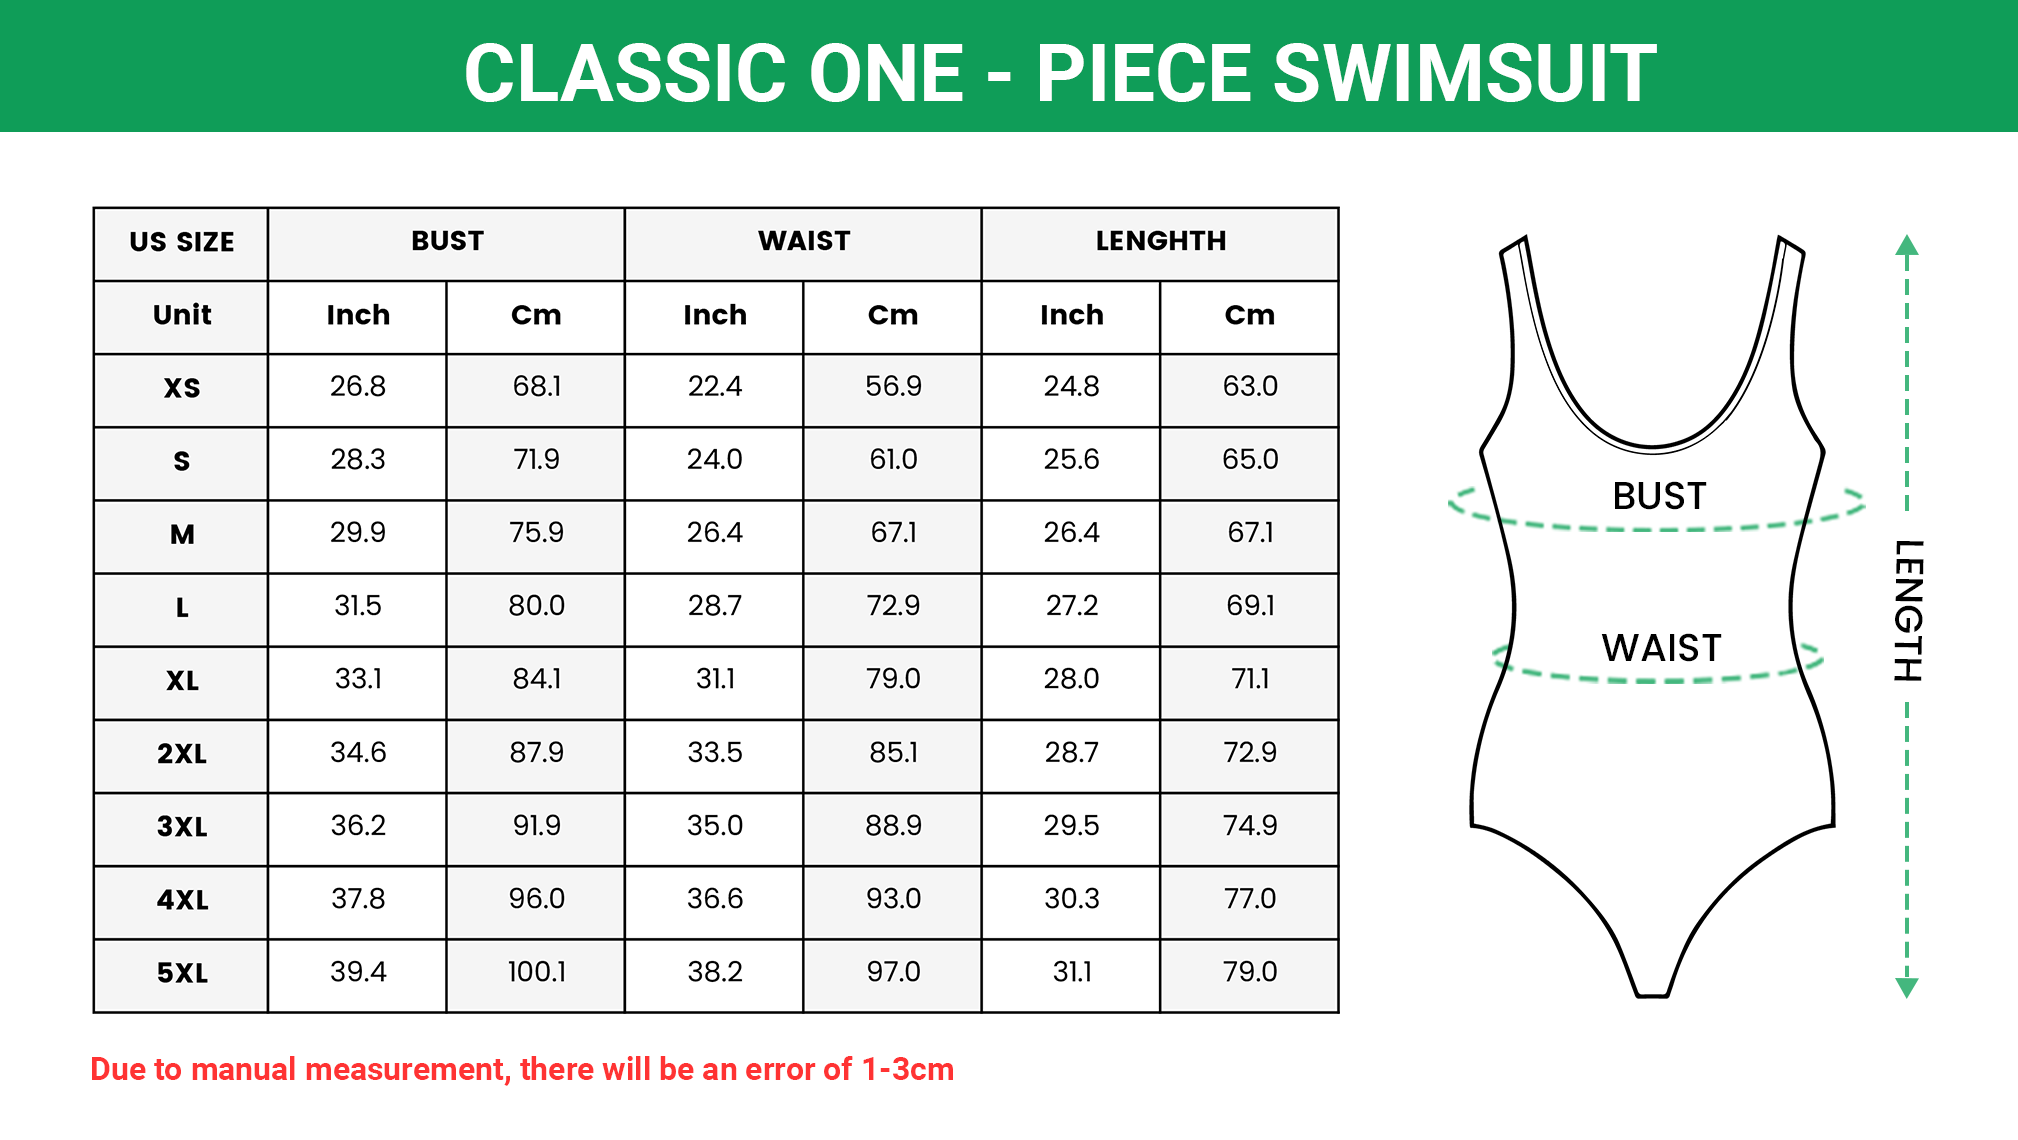 Turk Swim Size Chart